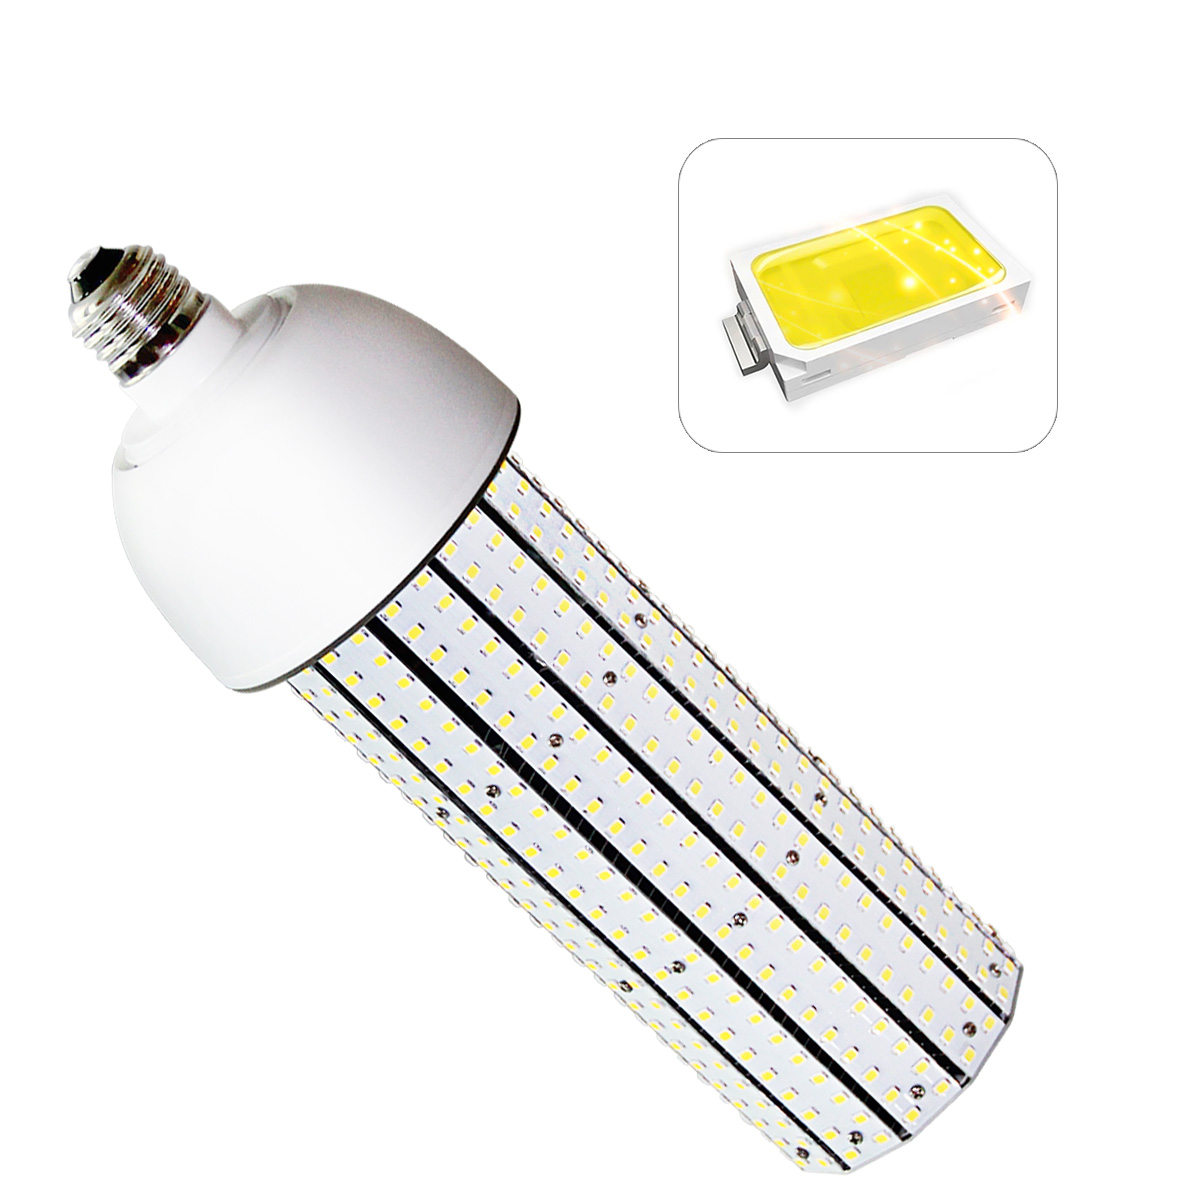 KAWELL 60W LED Corn Light Bulb E39 Large Mogul Base LED Commercial Retrofit Light for Fixtures HID/HPS/Metal Halide or CFL, 7200 lumen 6500K Daylight UL Listed/TUV-Qualified/DLC Certified 